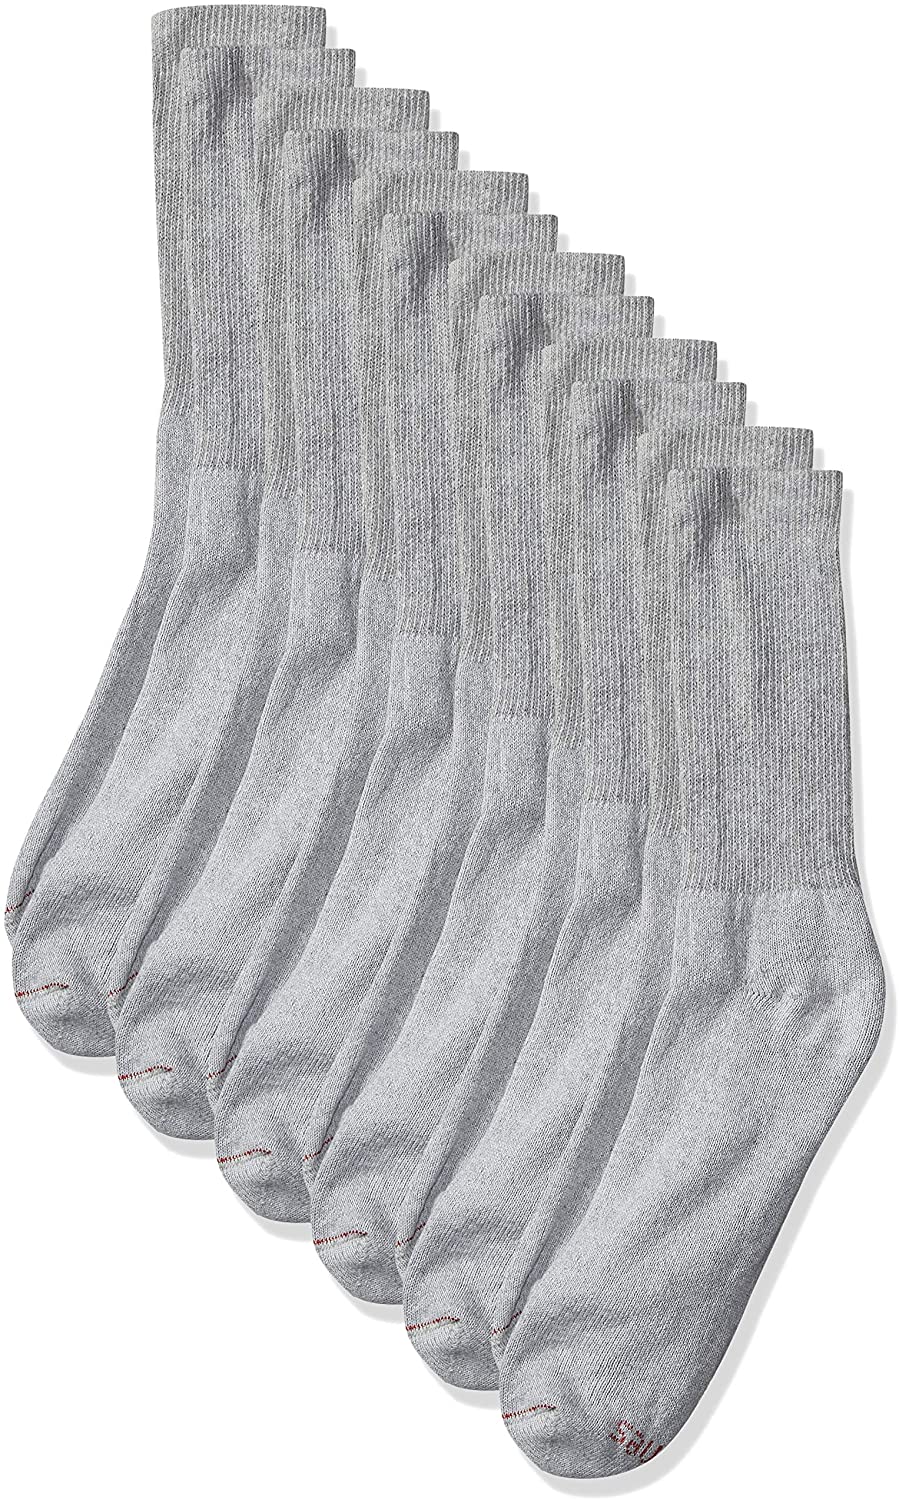 185/6 Hanes Grey Cushion Crew Socks